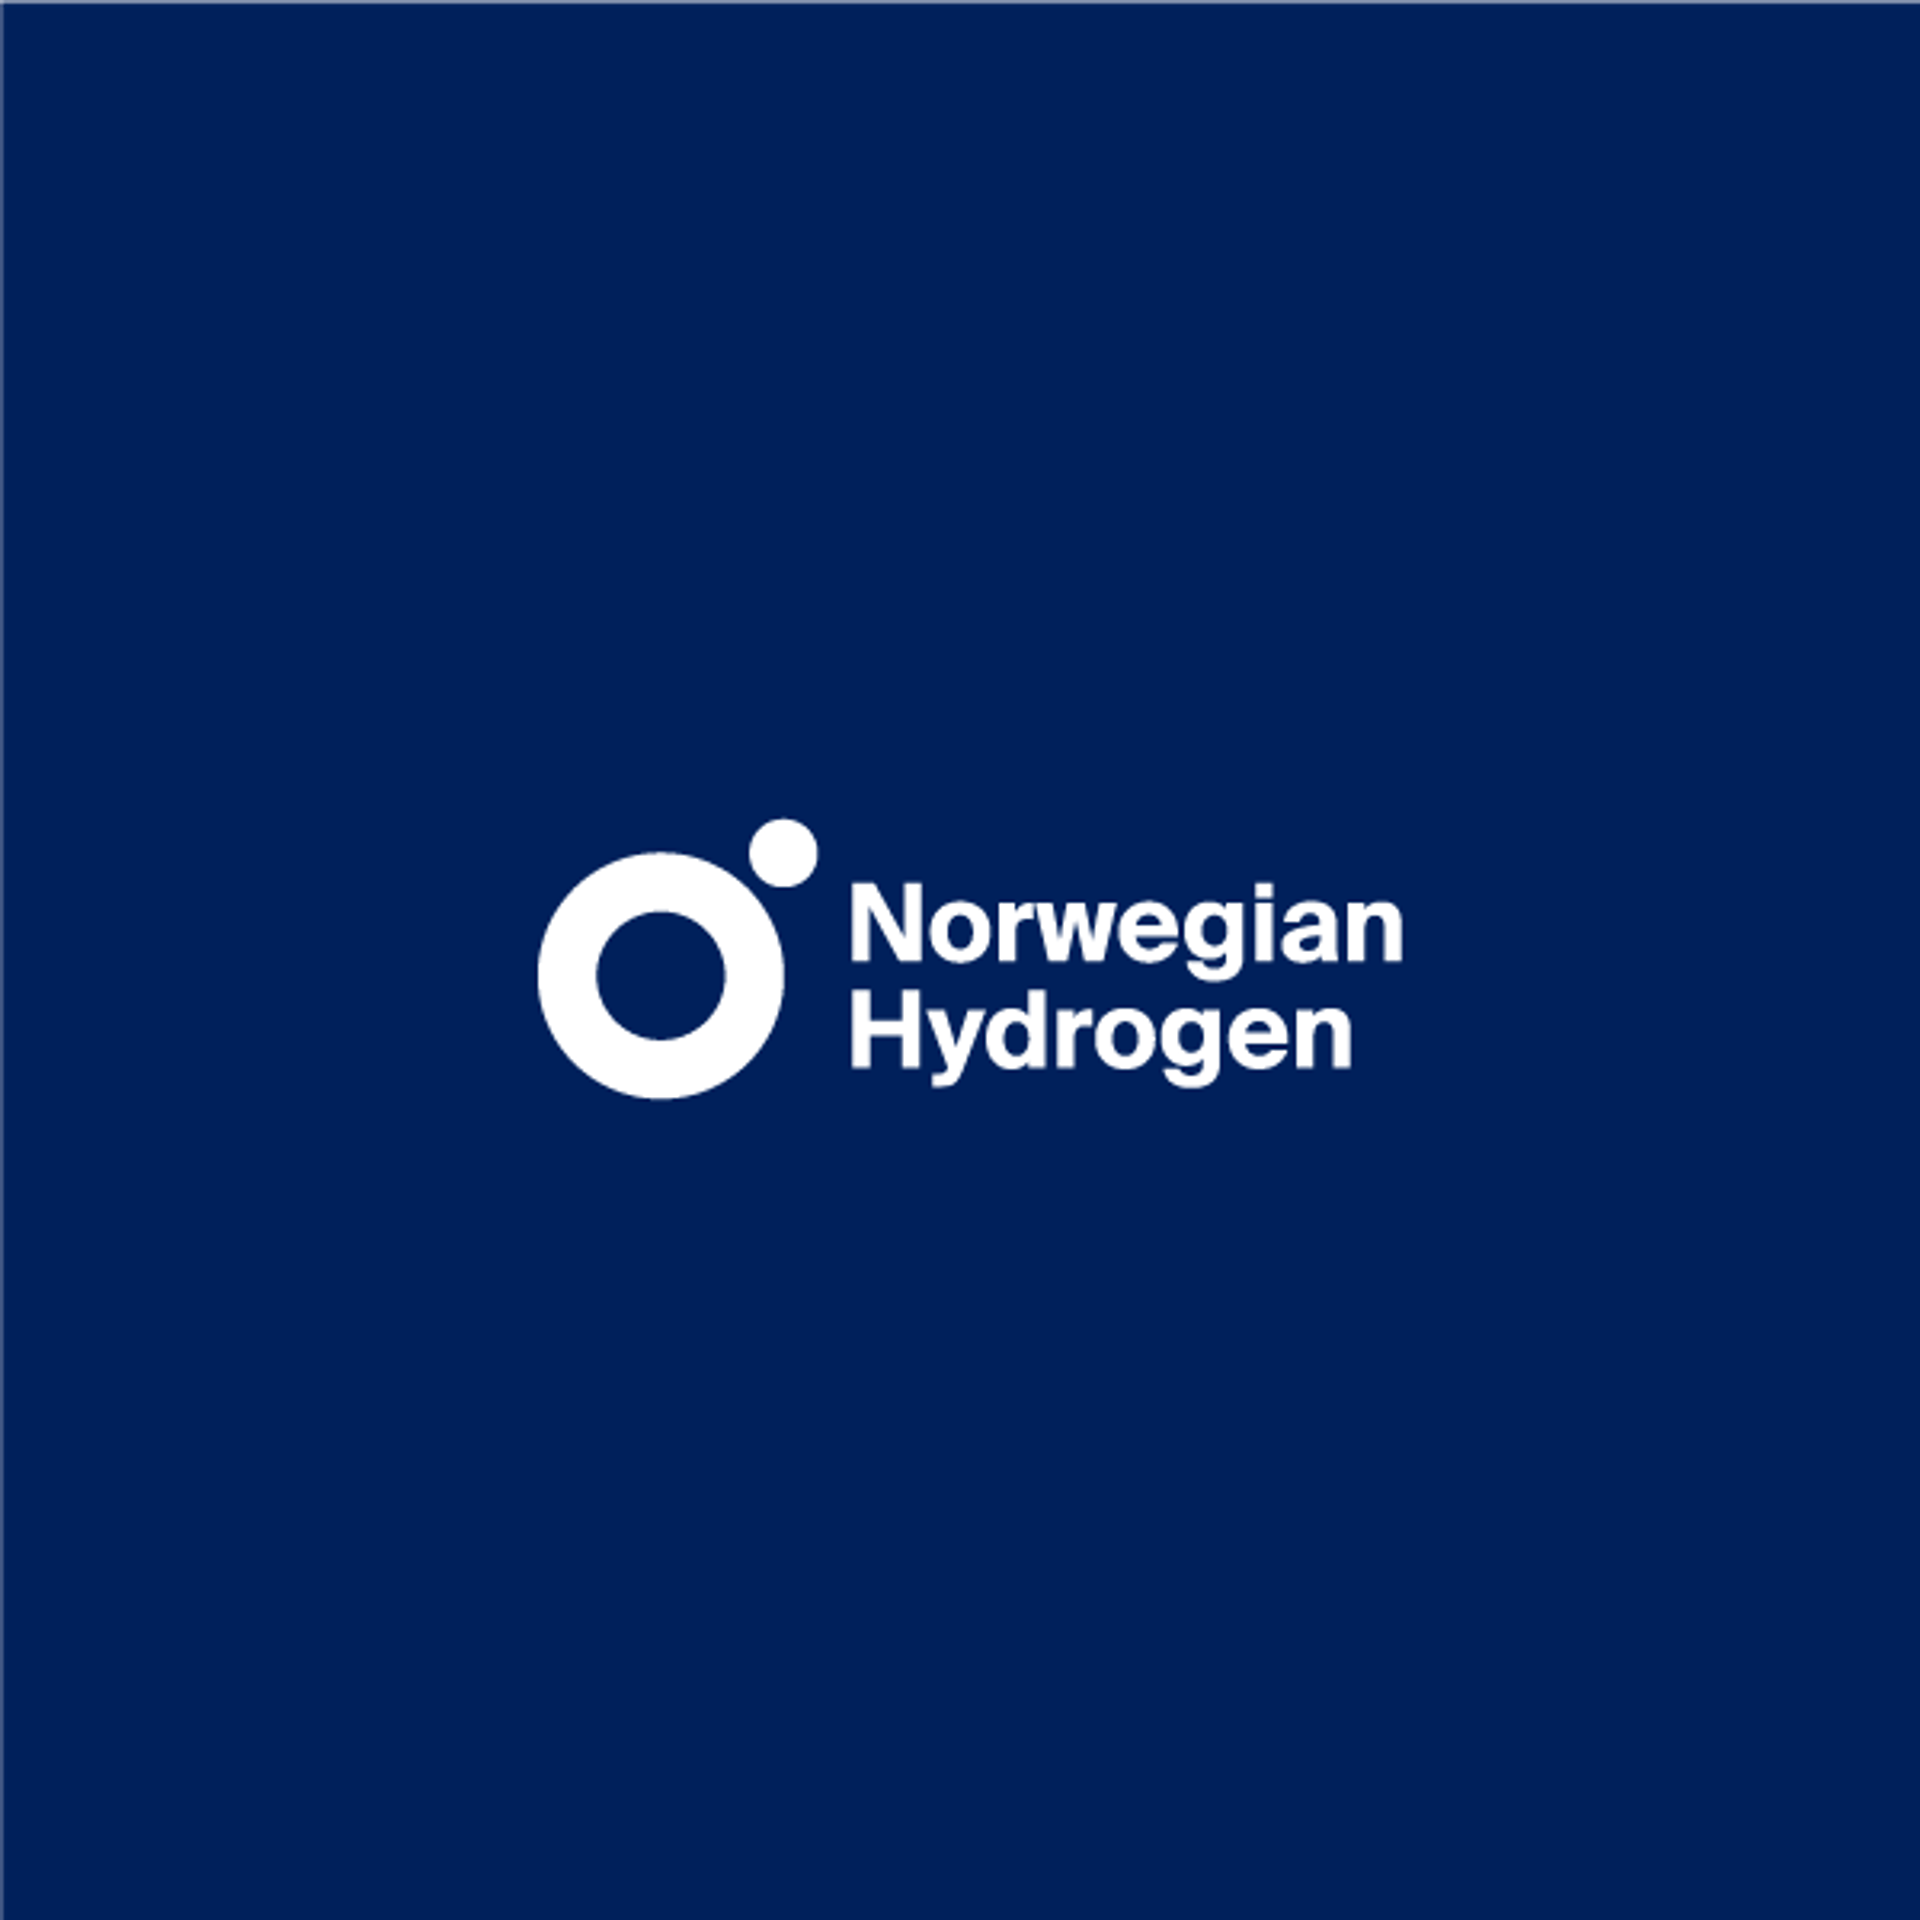 Norwegian Hydrogen logo